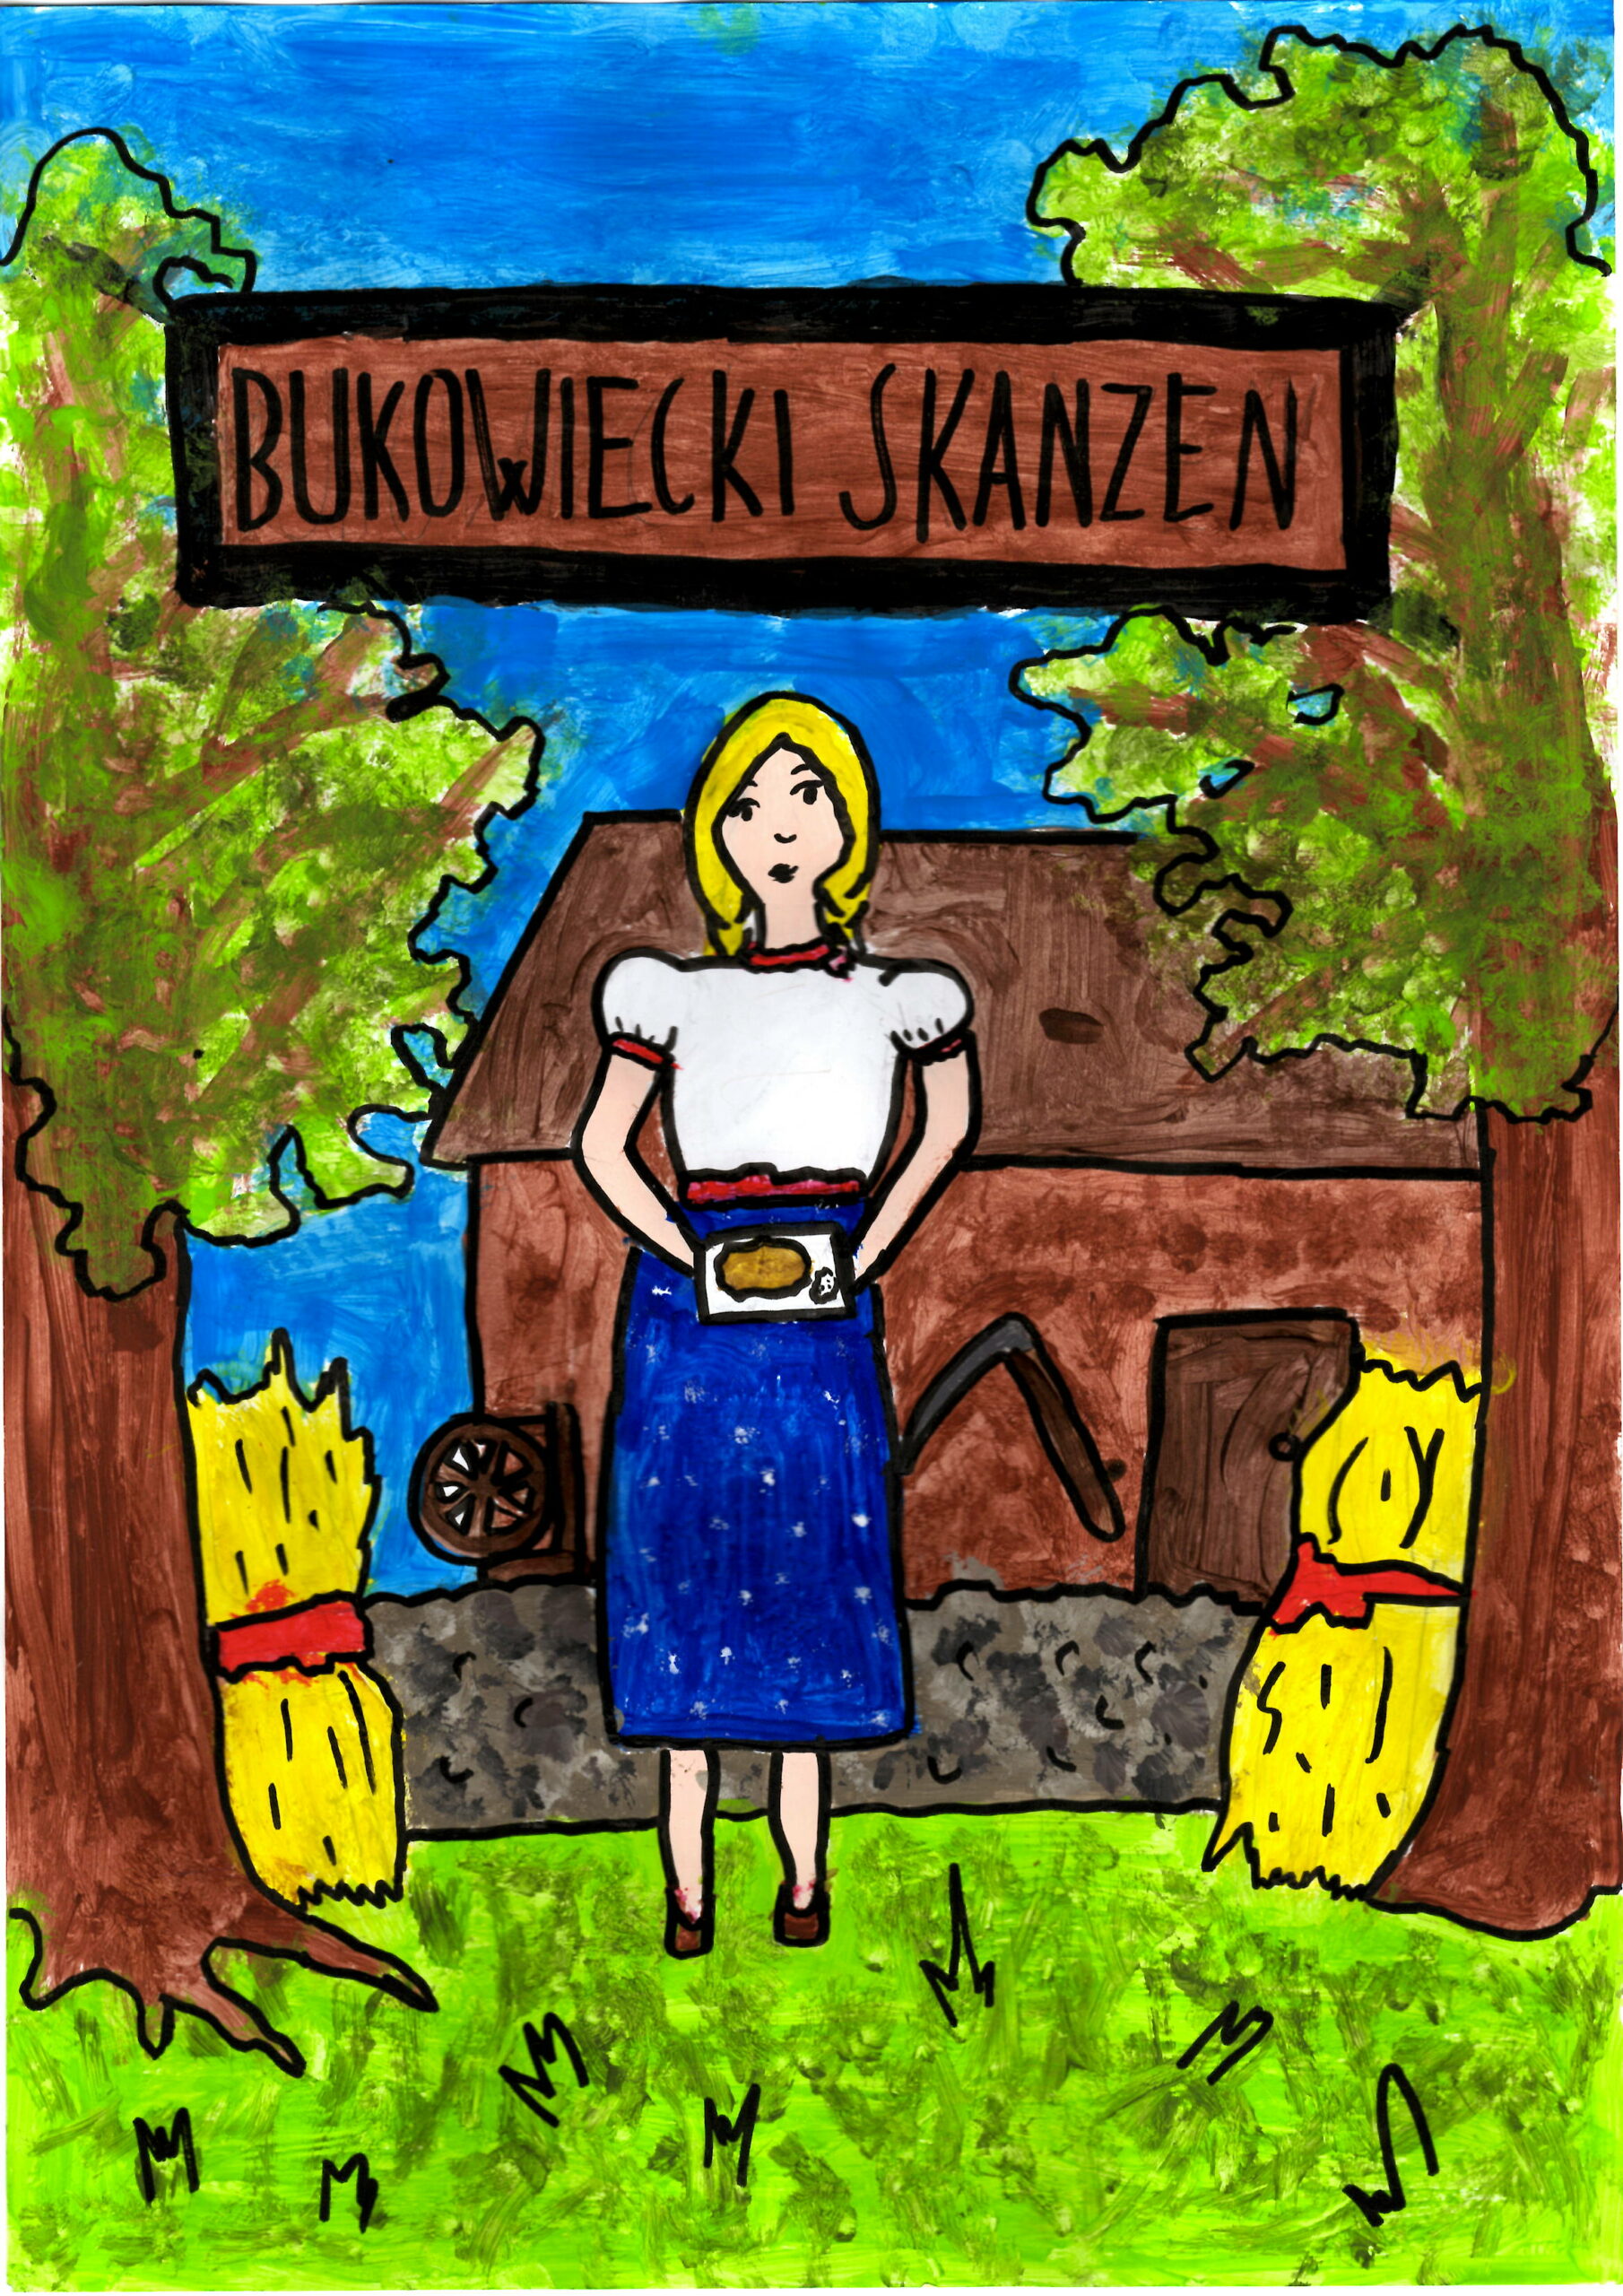 Bukovecký skanzen / Bukovec open-air museum